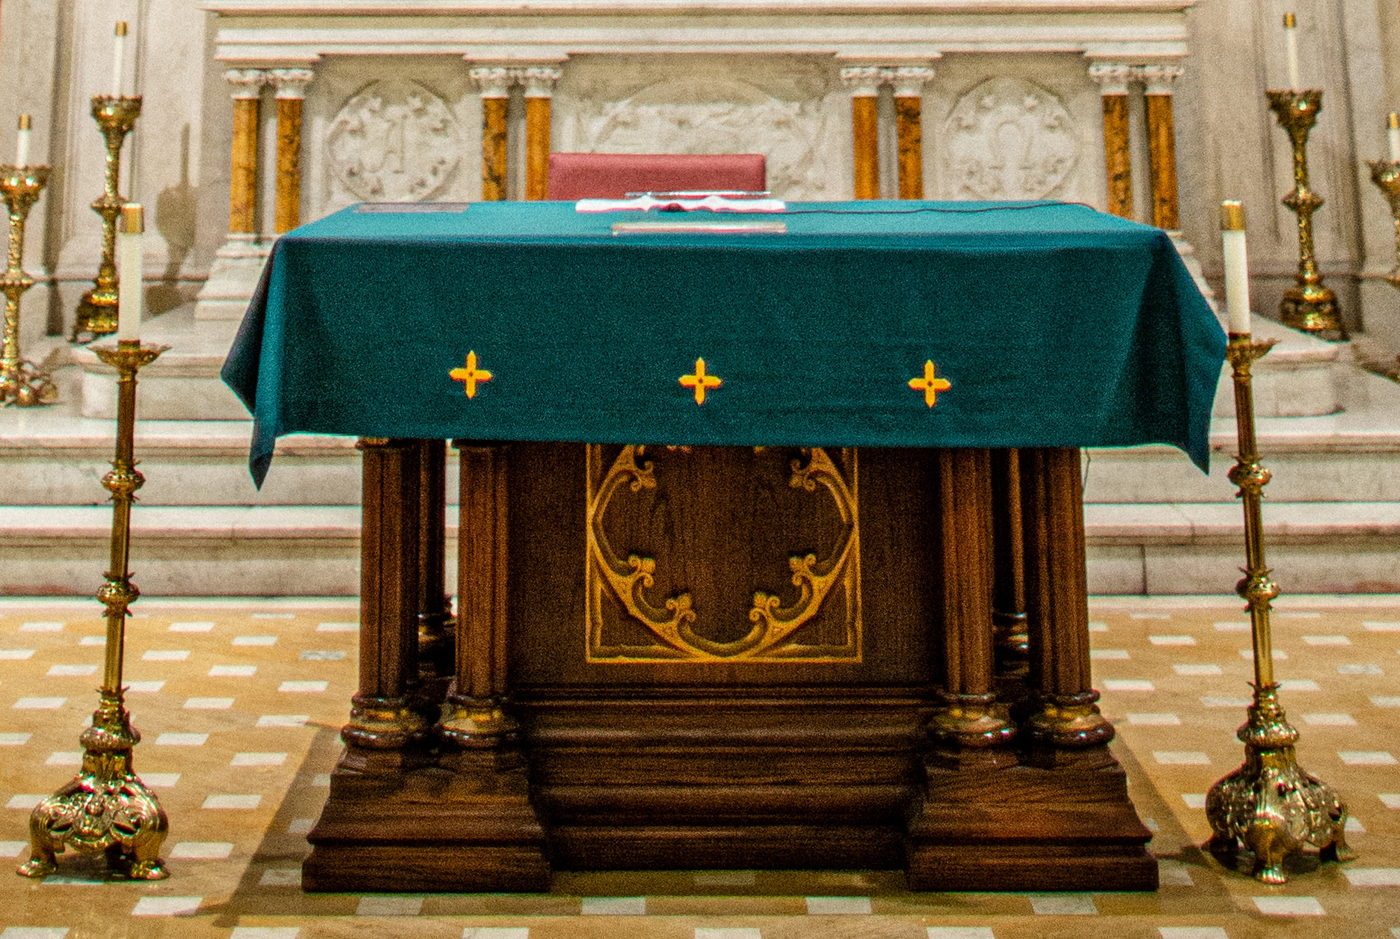 altar at St. Francis Xavier church in Park Slope, Brooklyn